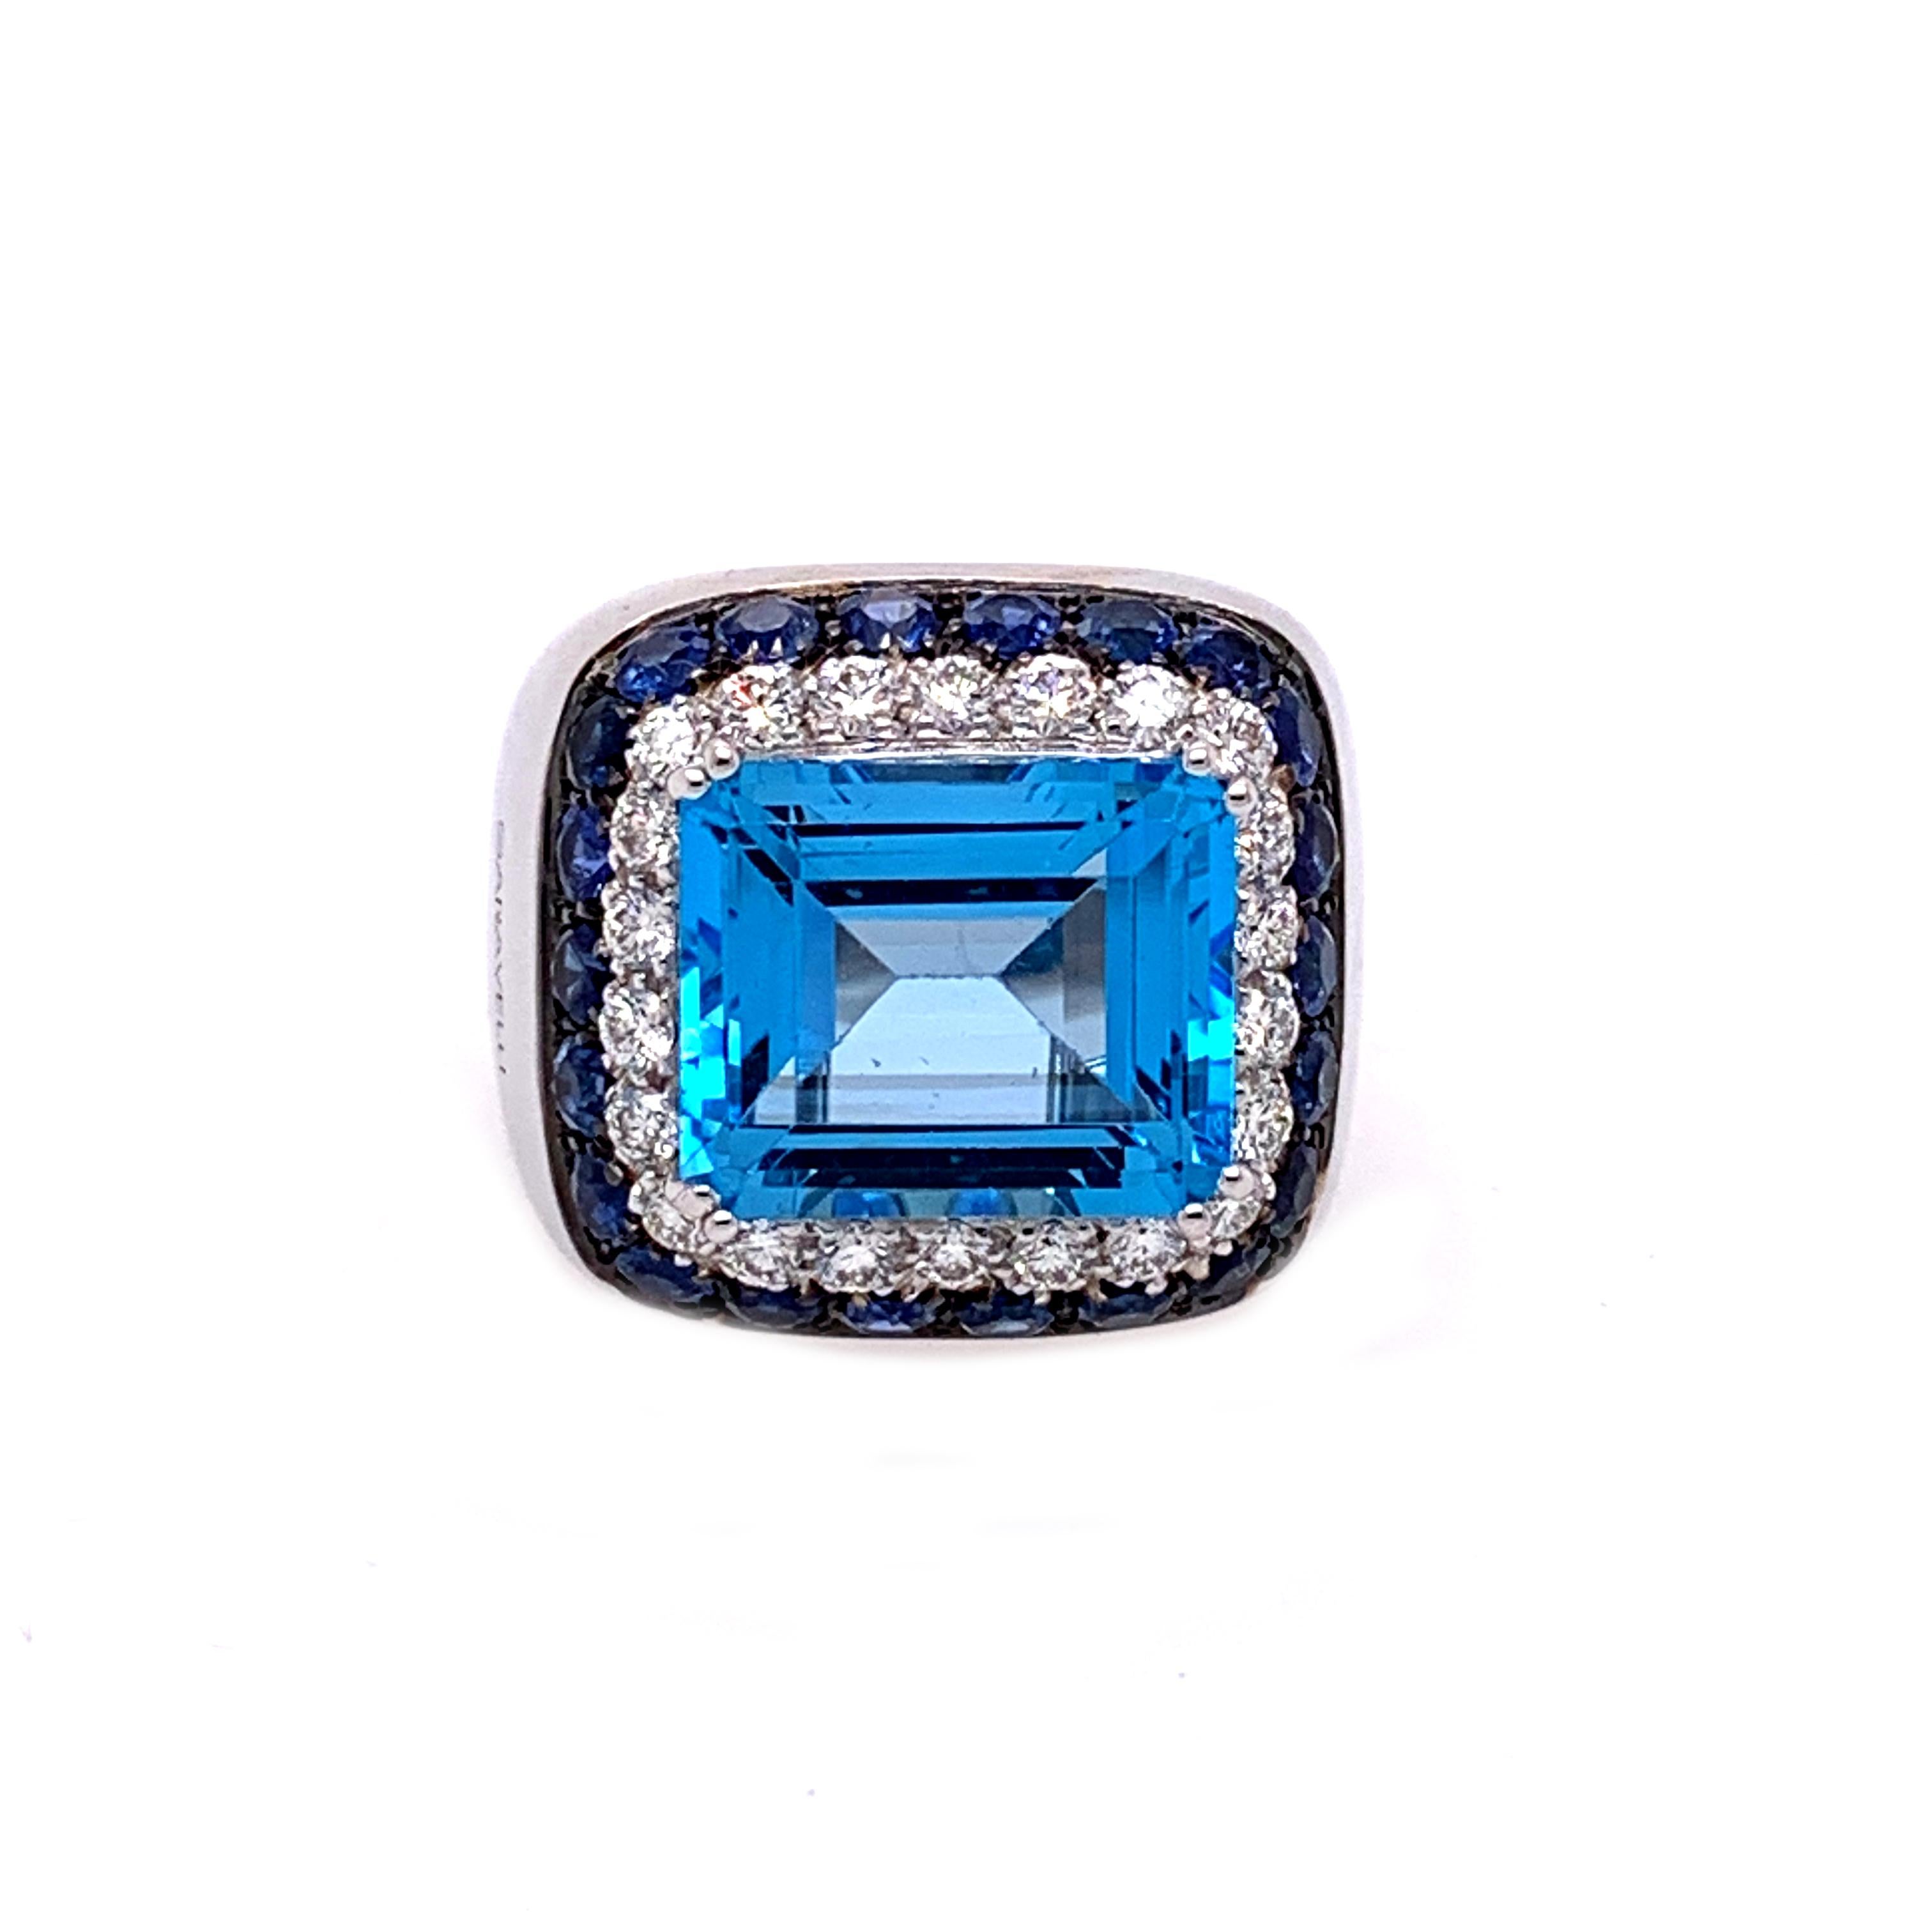 Contemporary 18 Karat White Gold Diamonds, Blue Sapphires and Blue Topaz Ring